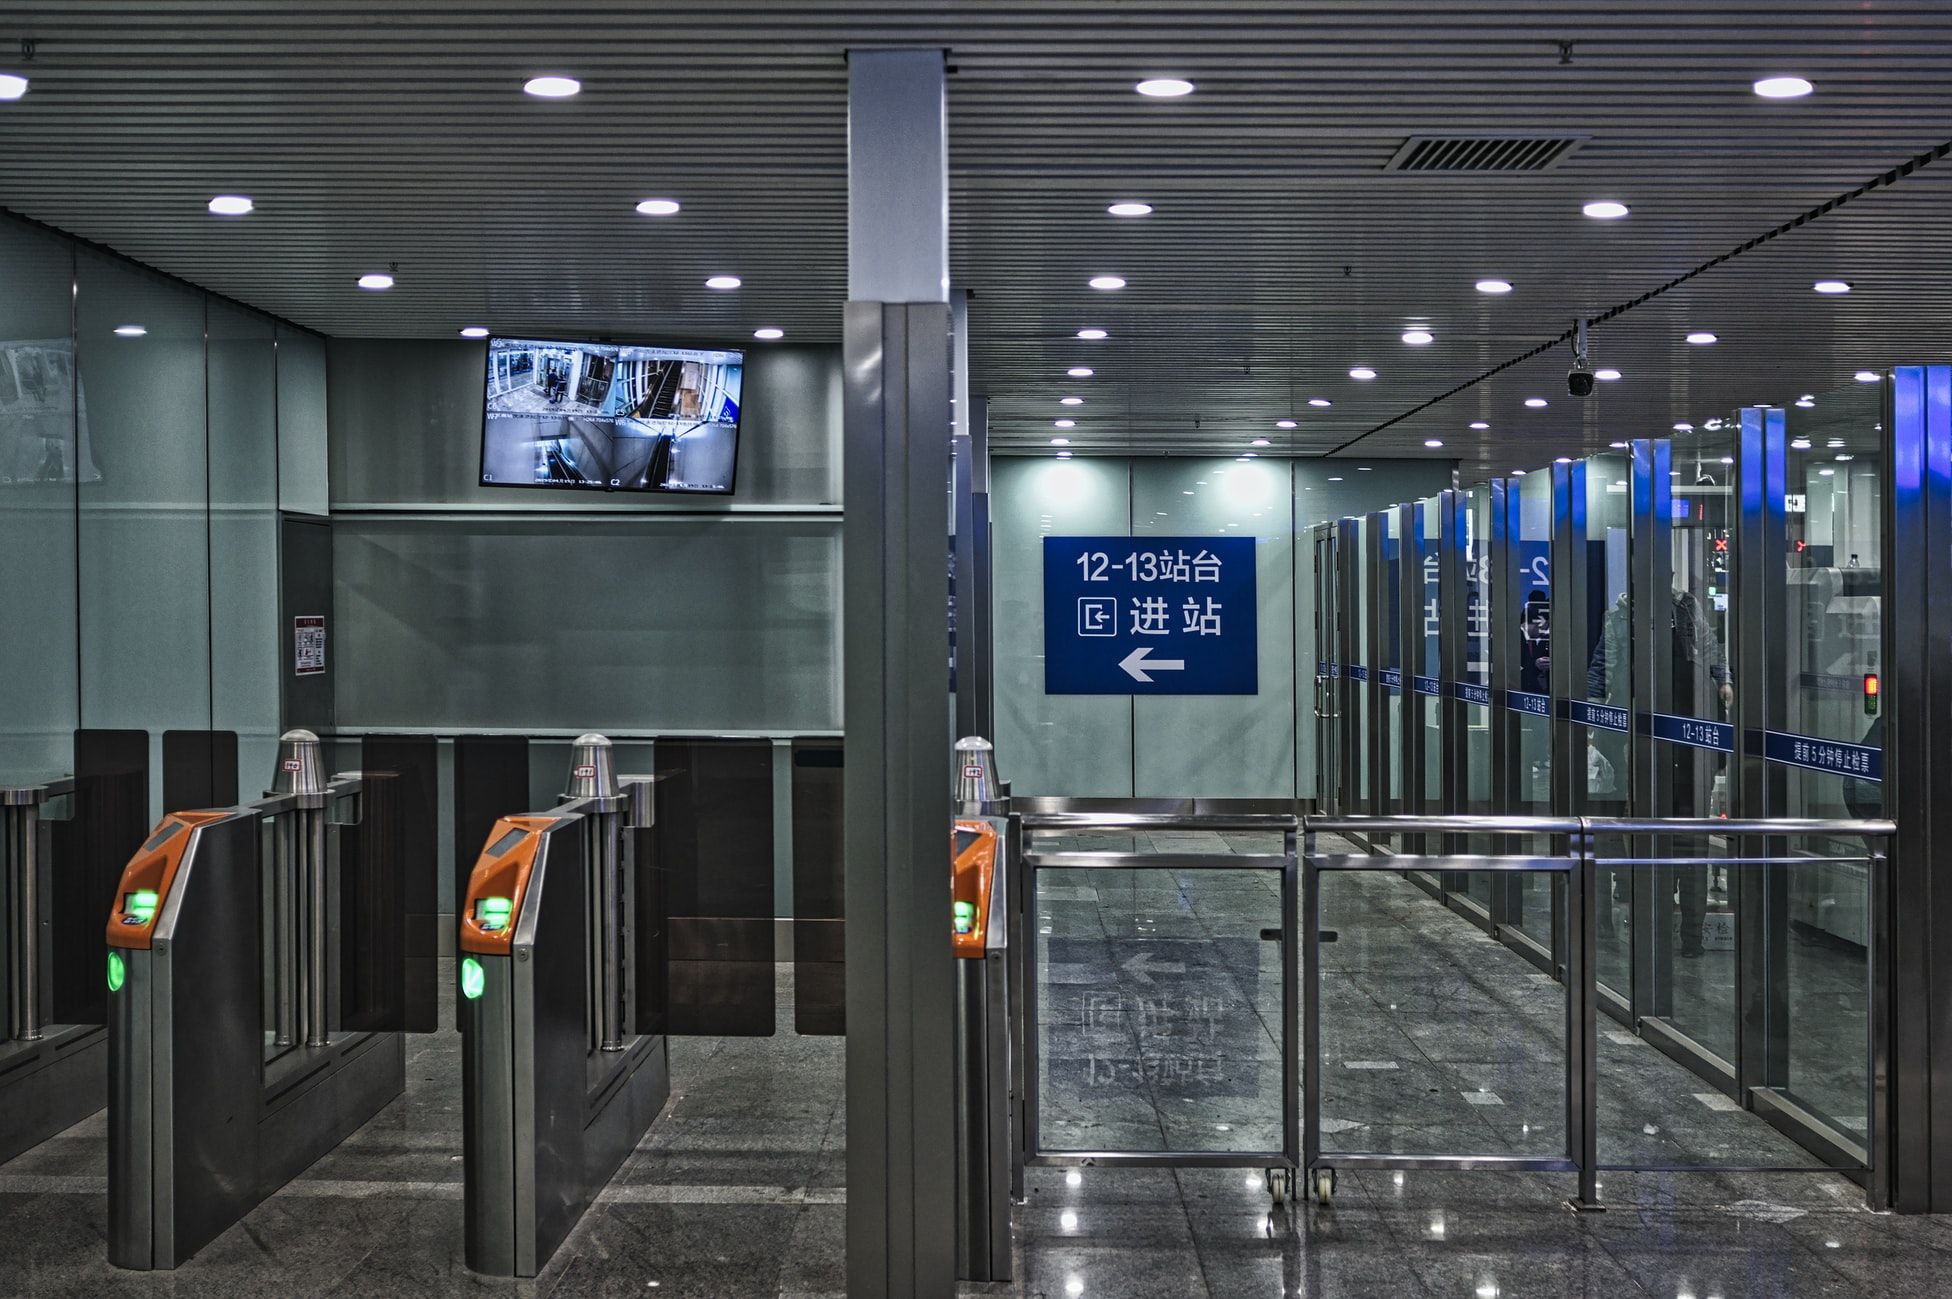 Airport security gates